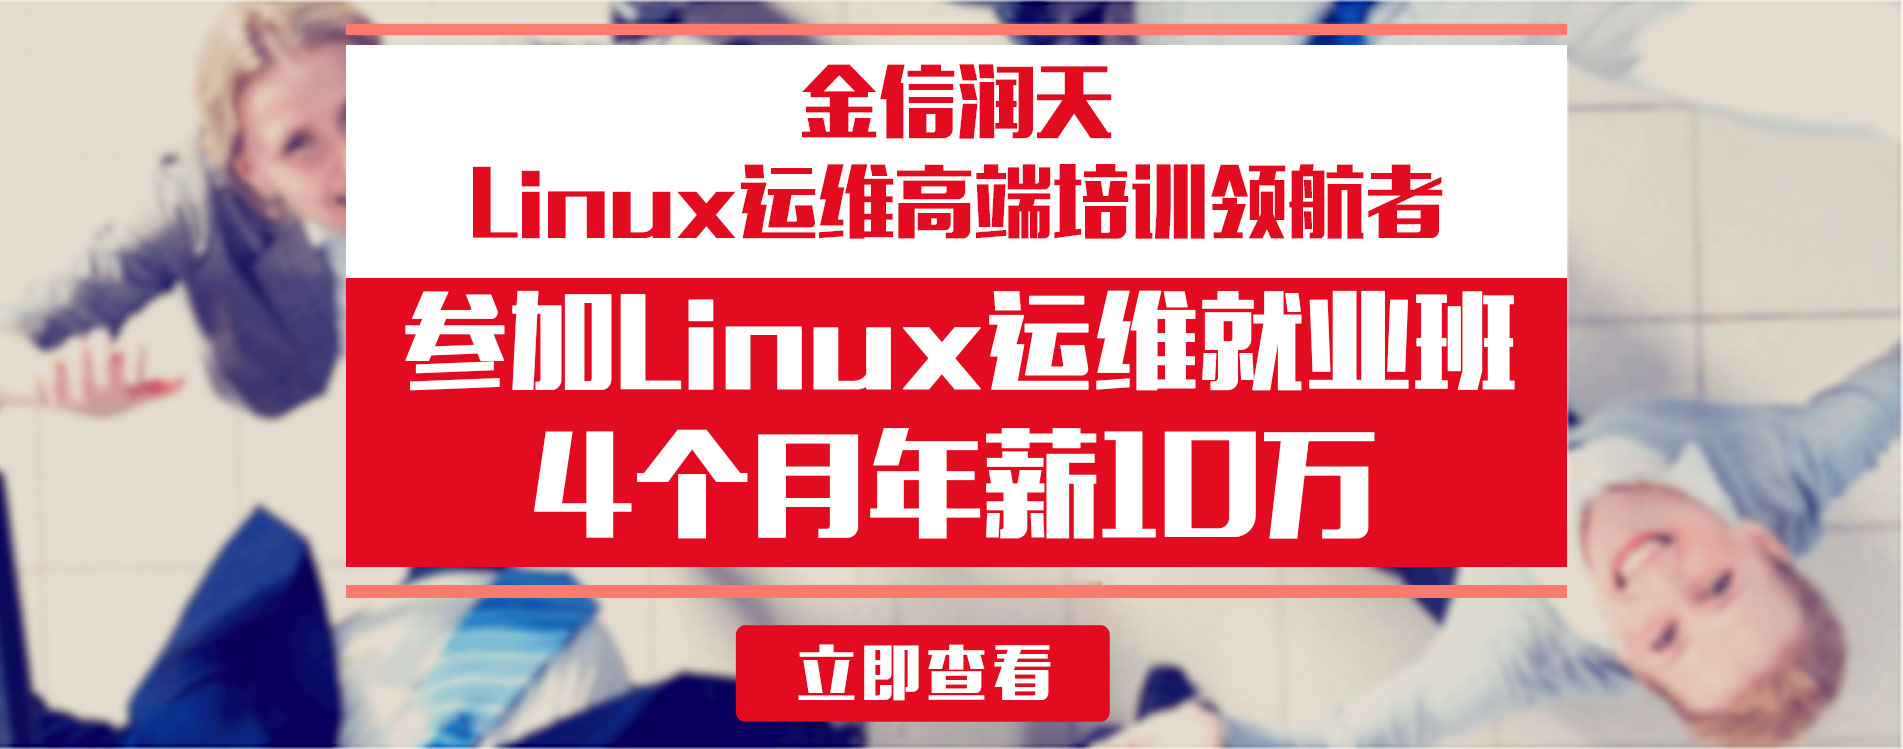 linux运维培训